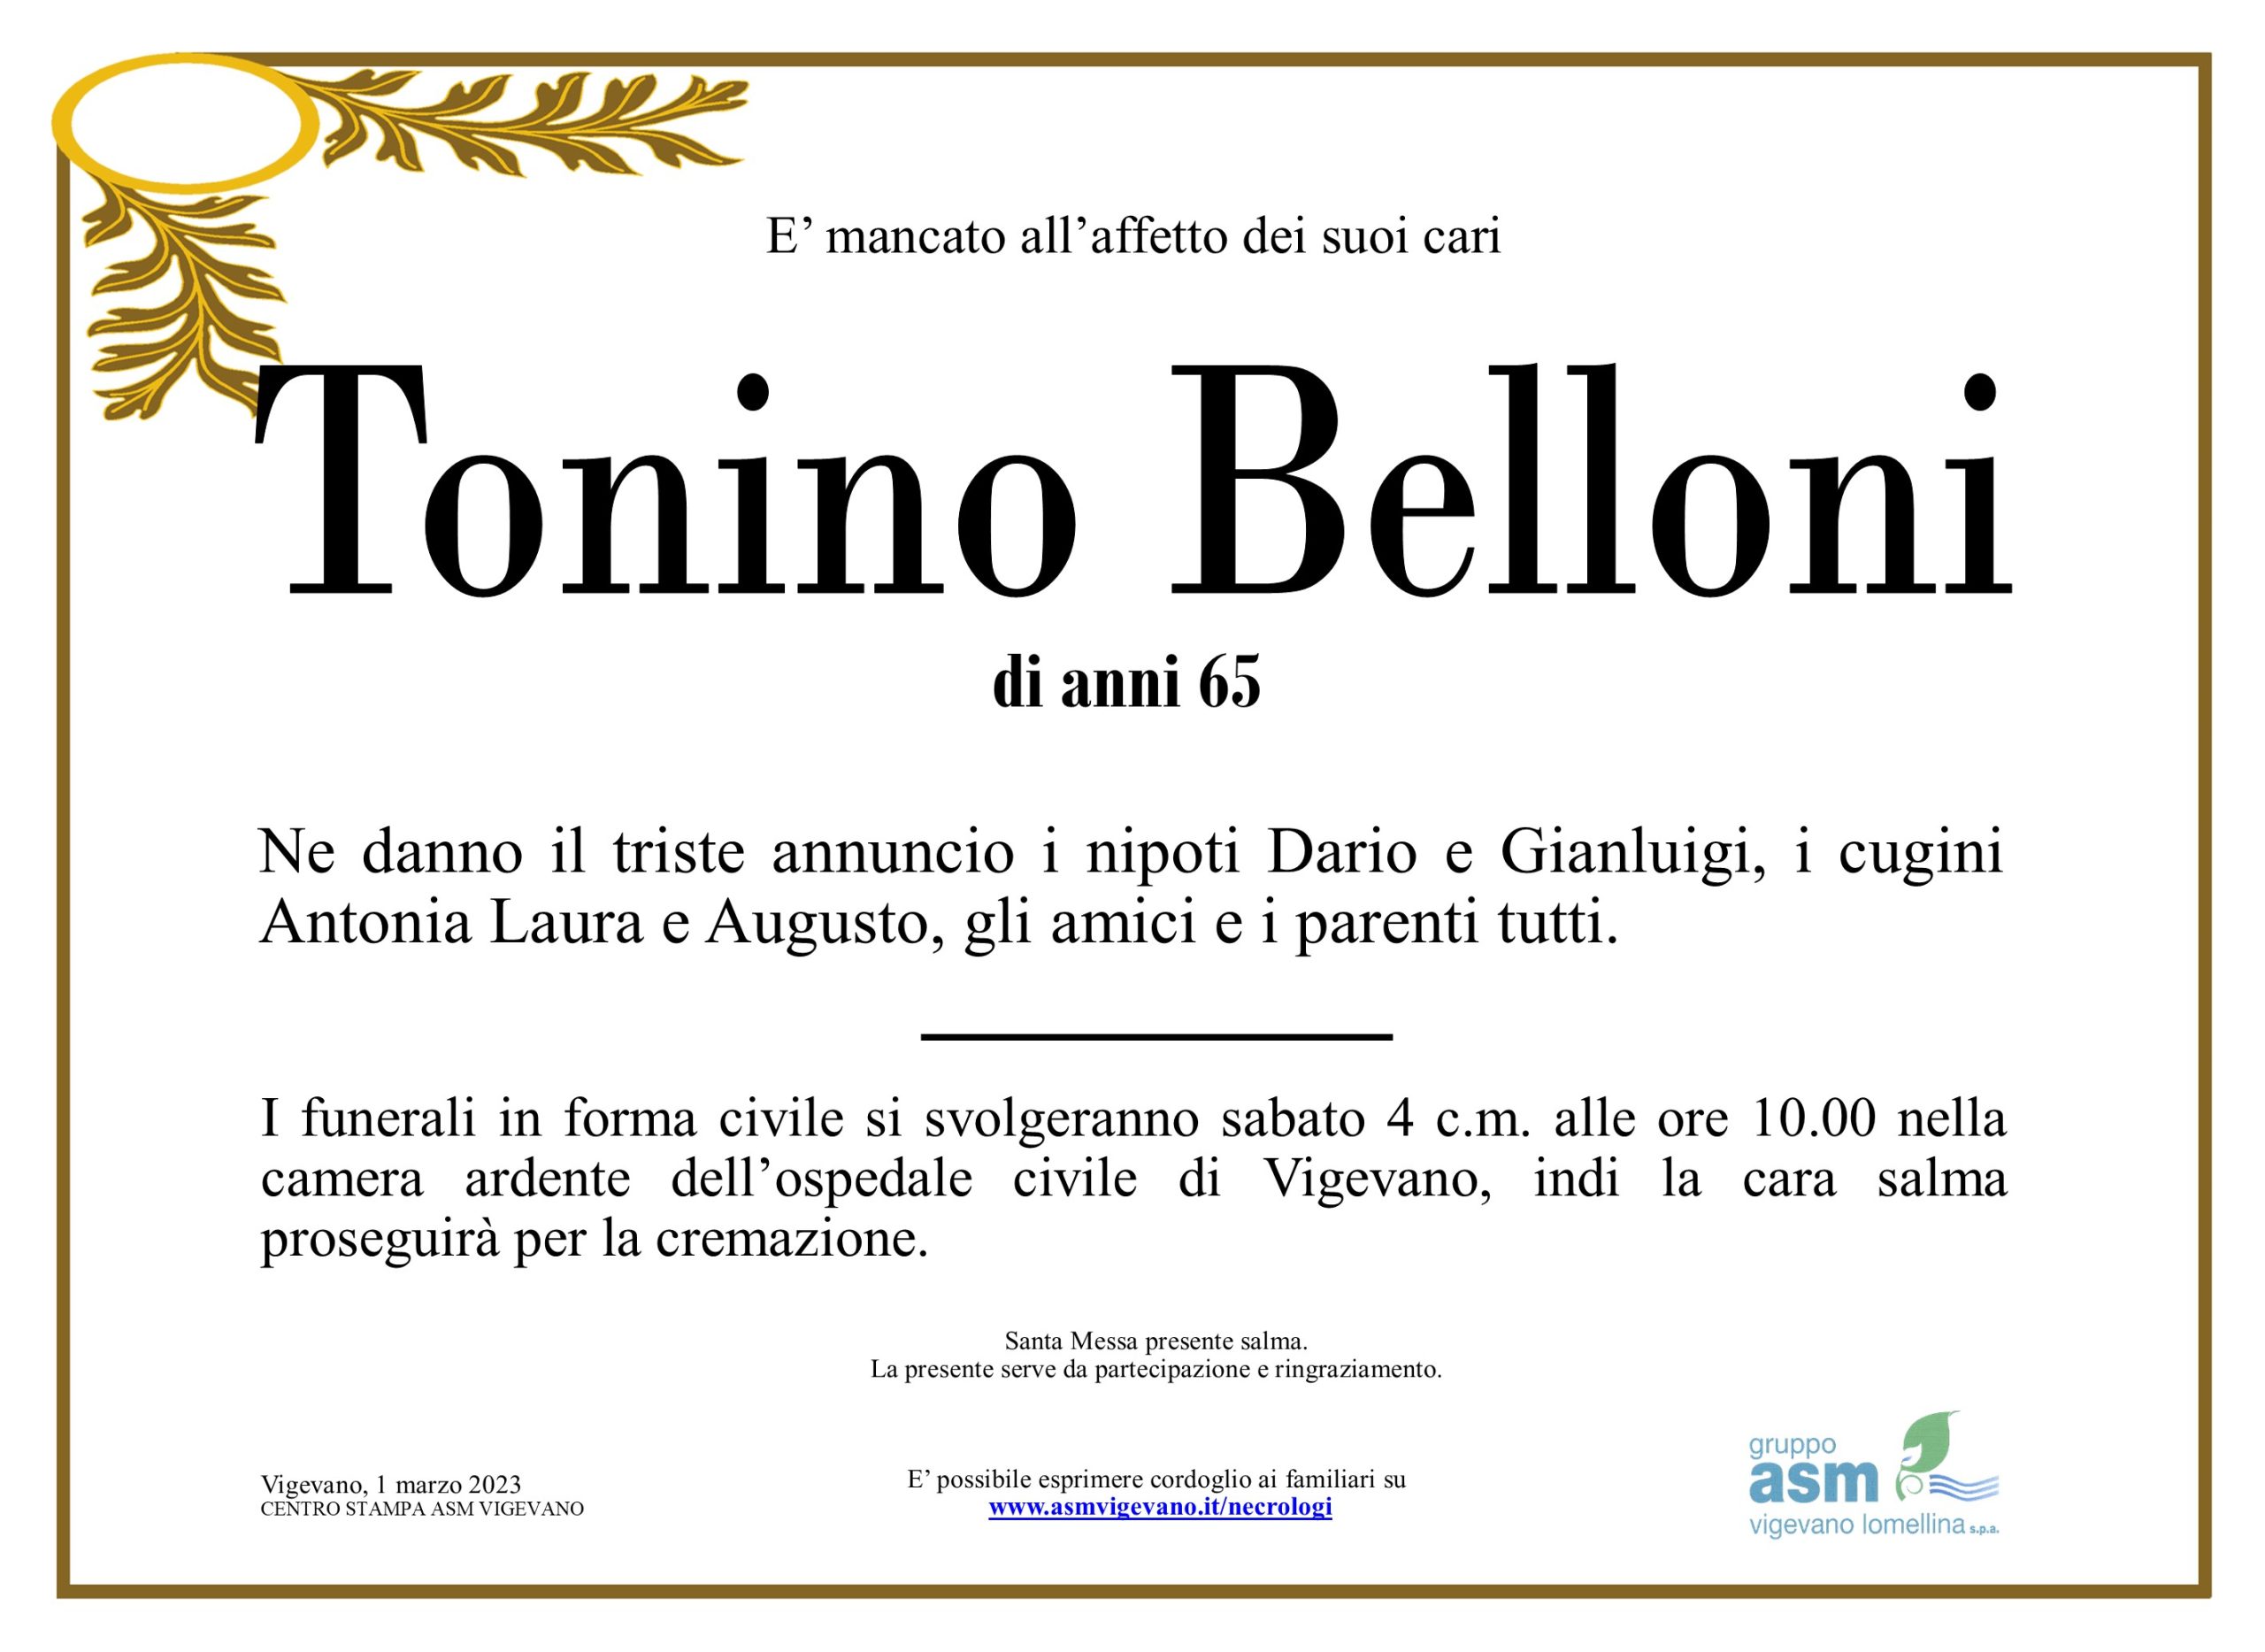 Tonino Belloni